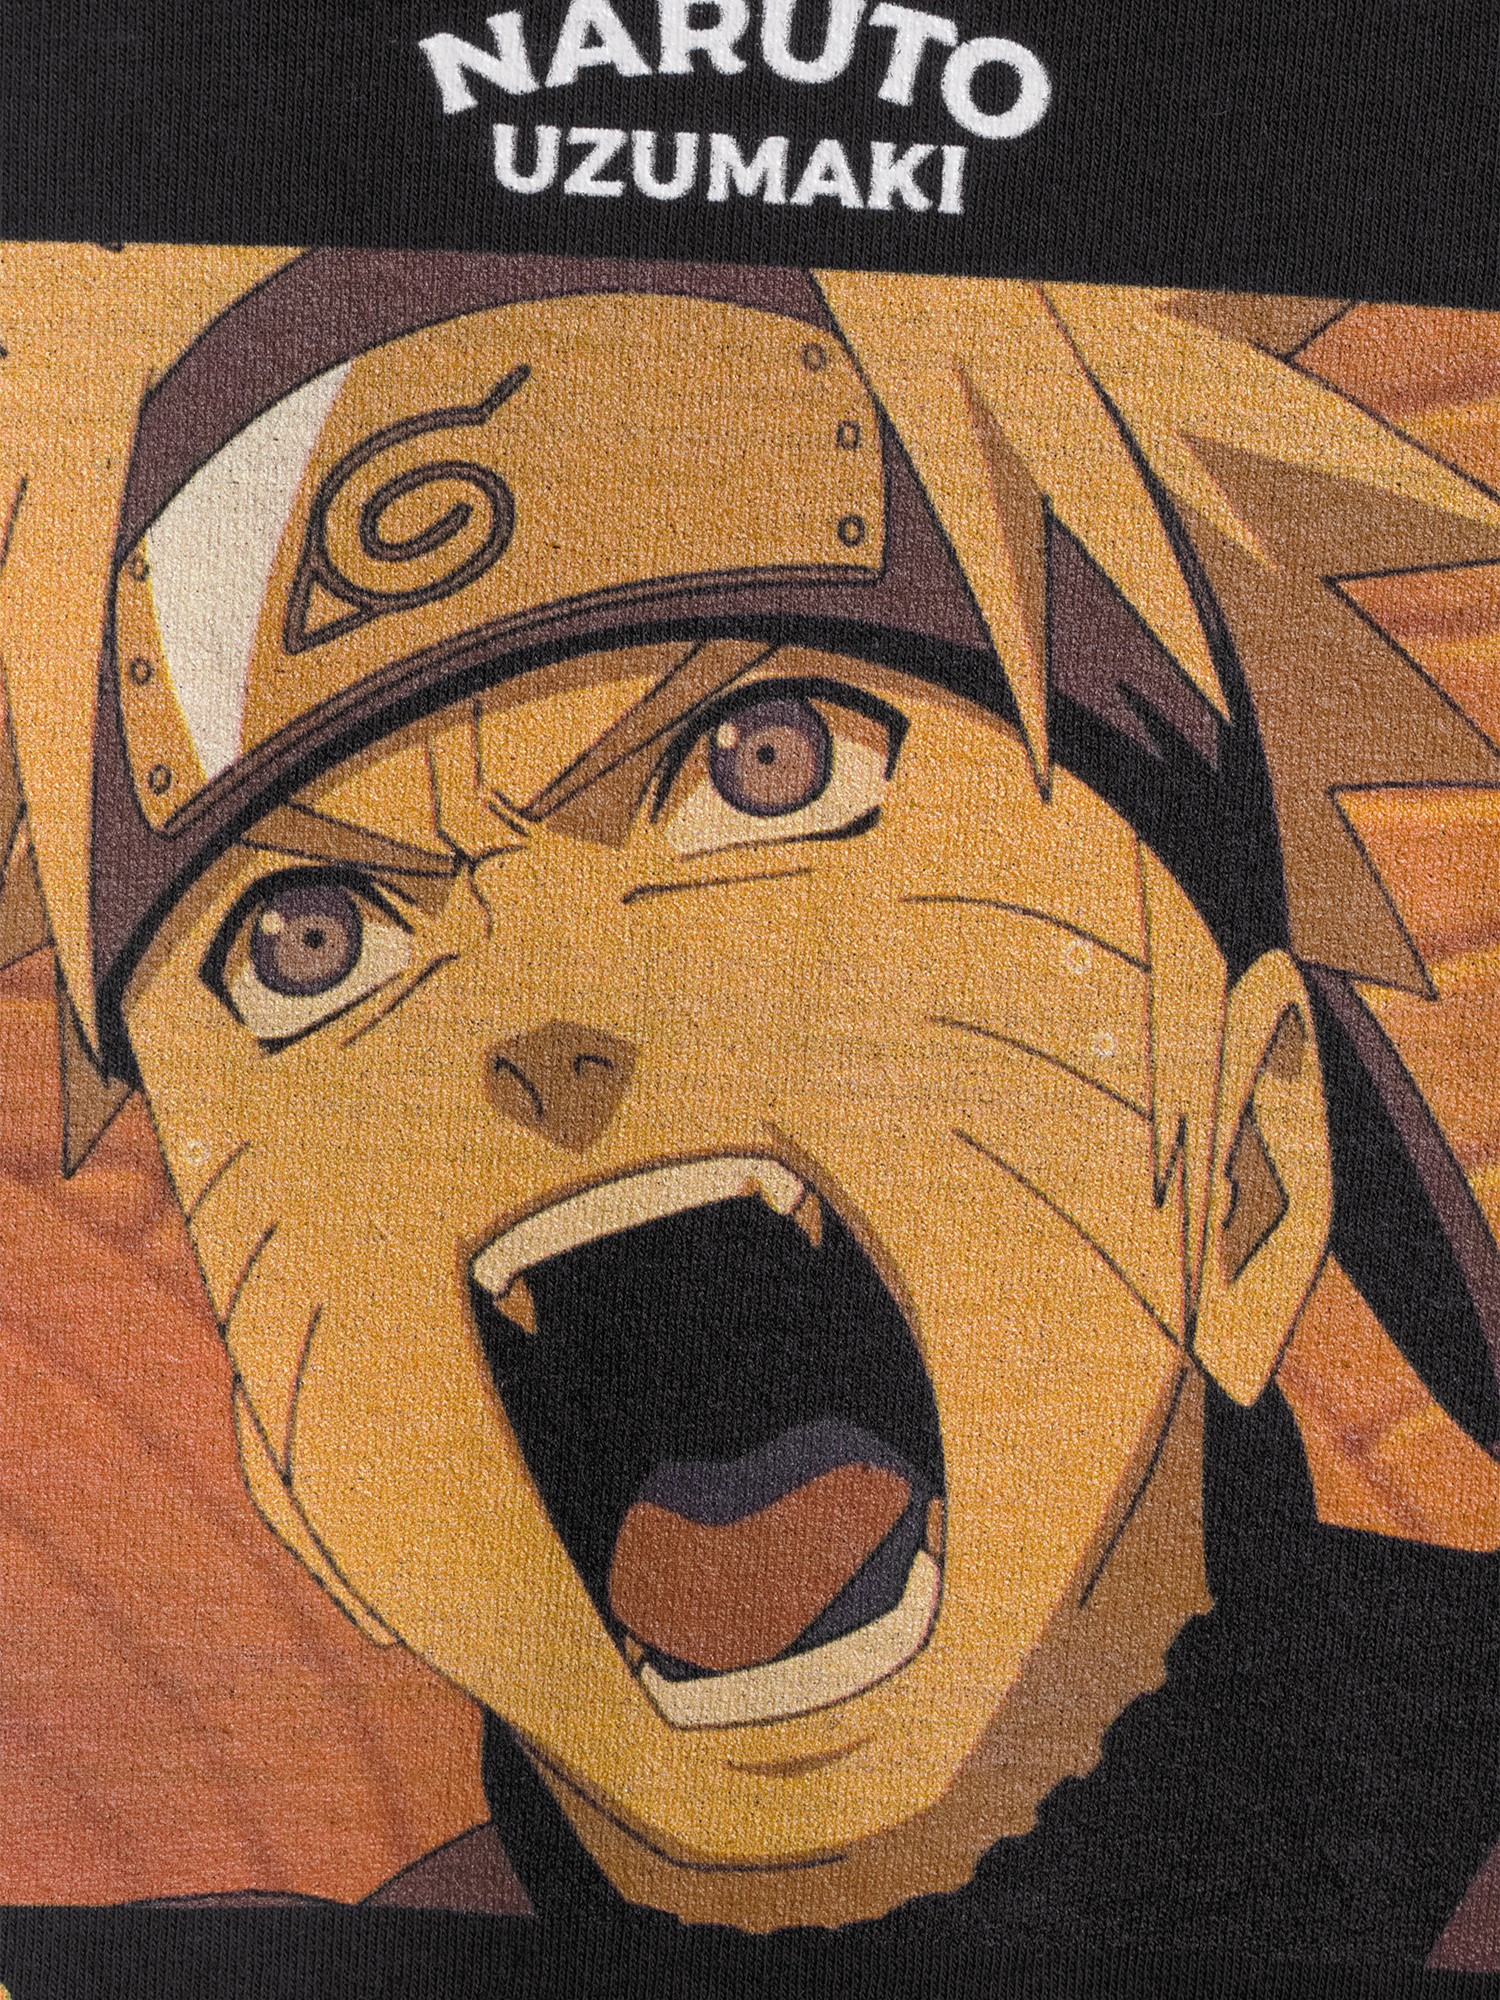 Naruto Men's & Big Men's Uzumaki Anime Graphic Tees Shirts, 2-Pack, Sizes S-3XL, Naruto Anime Mens T-Shirts - image 4 of 8